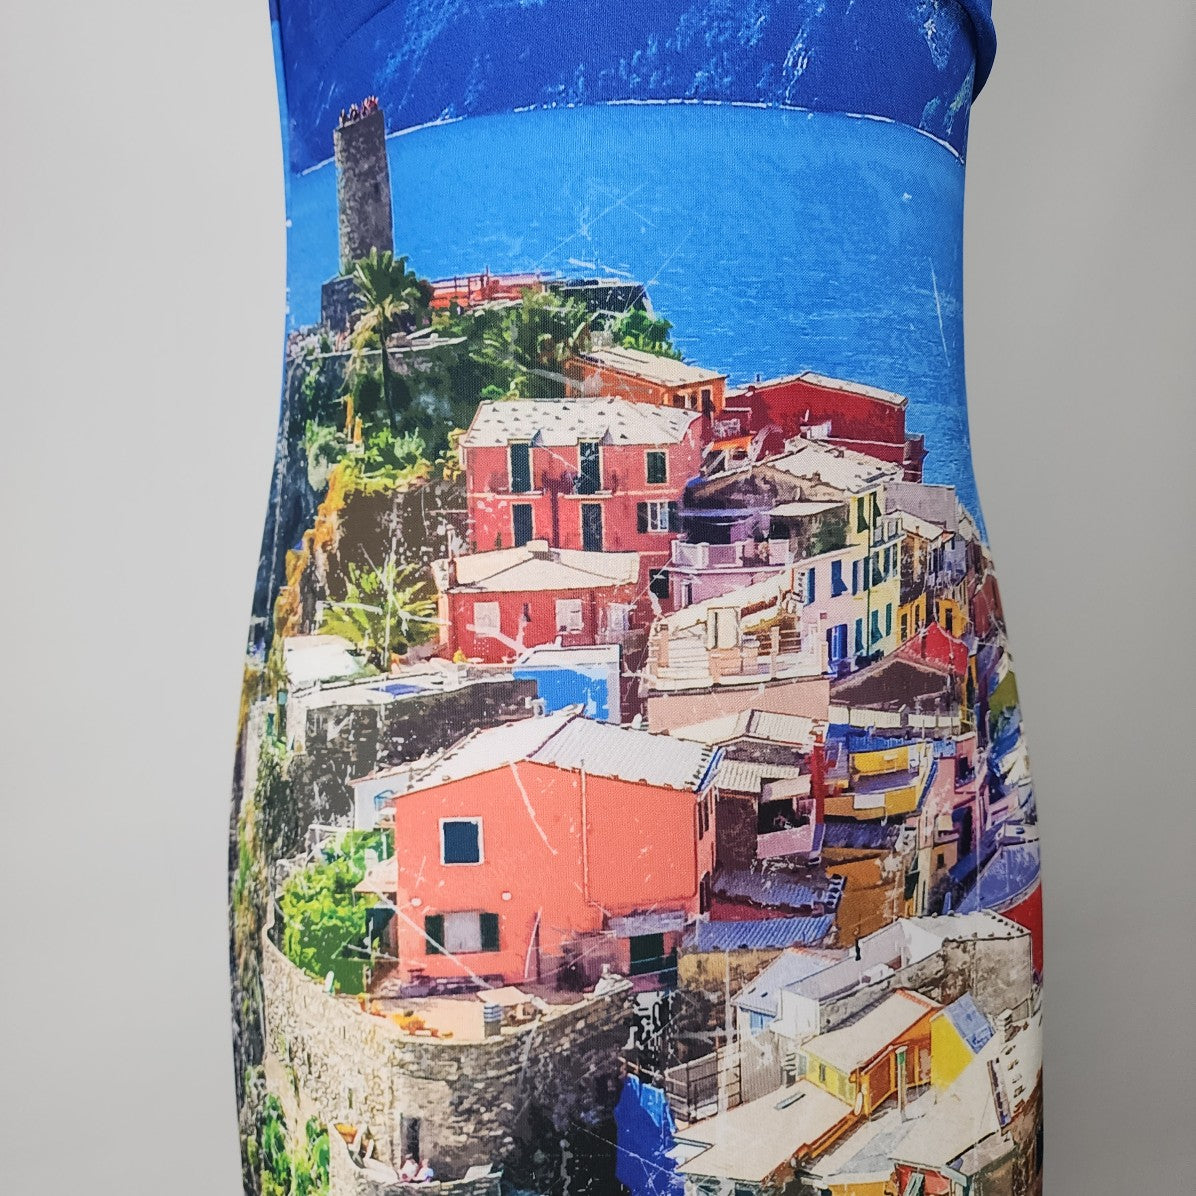 Art By Dolcezza Blue Tropical Town Scene Sheath Dress Size M